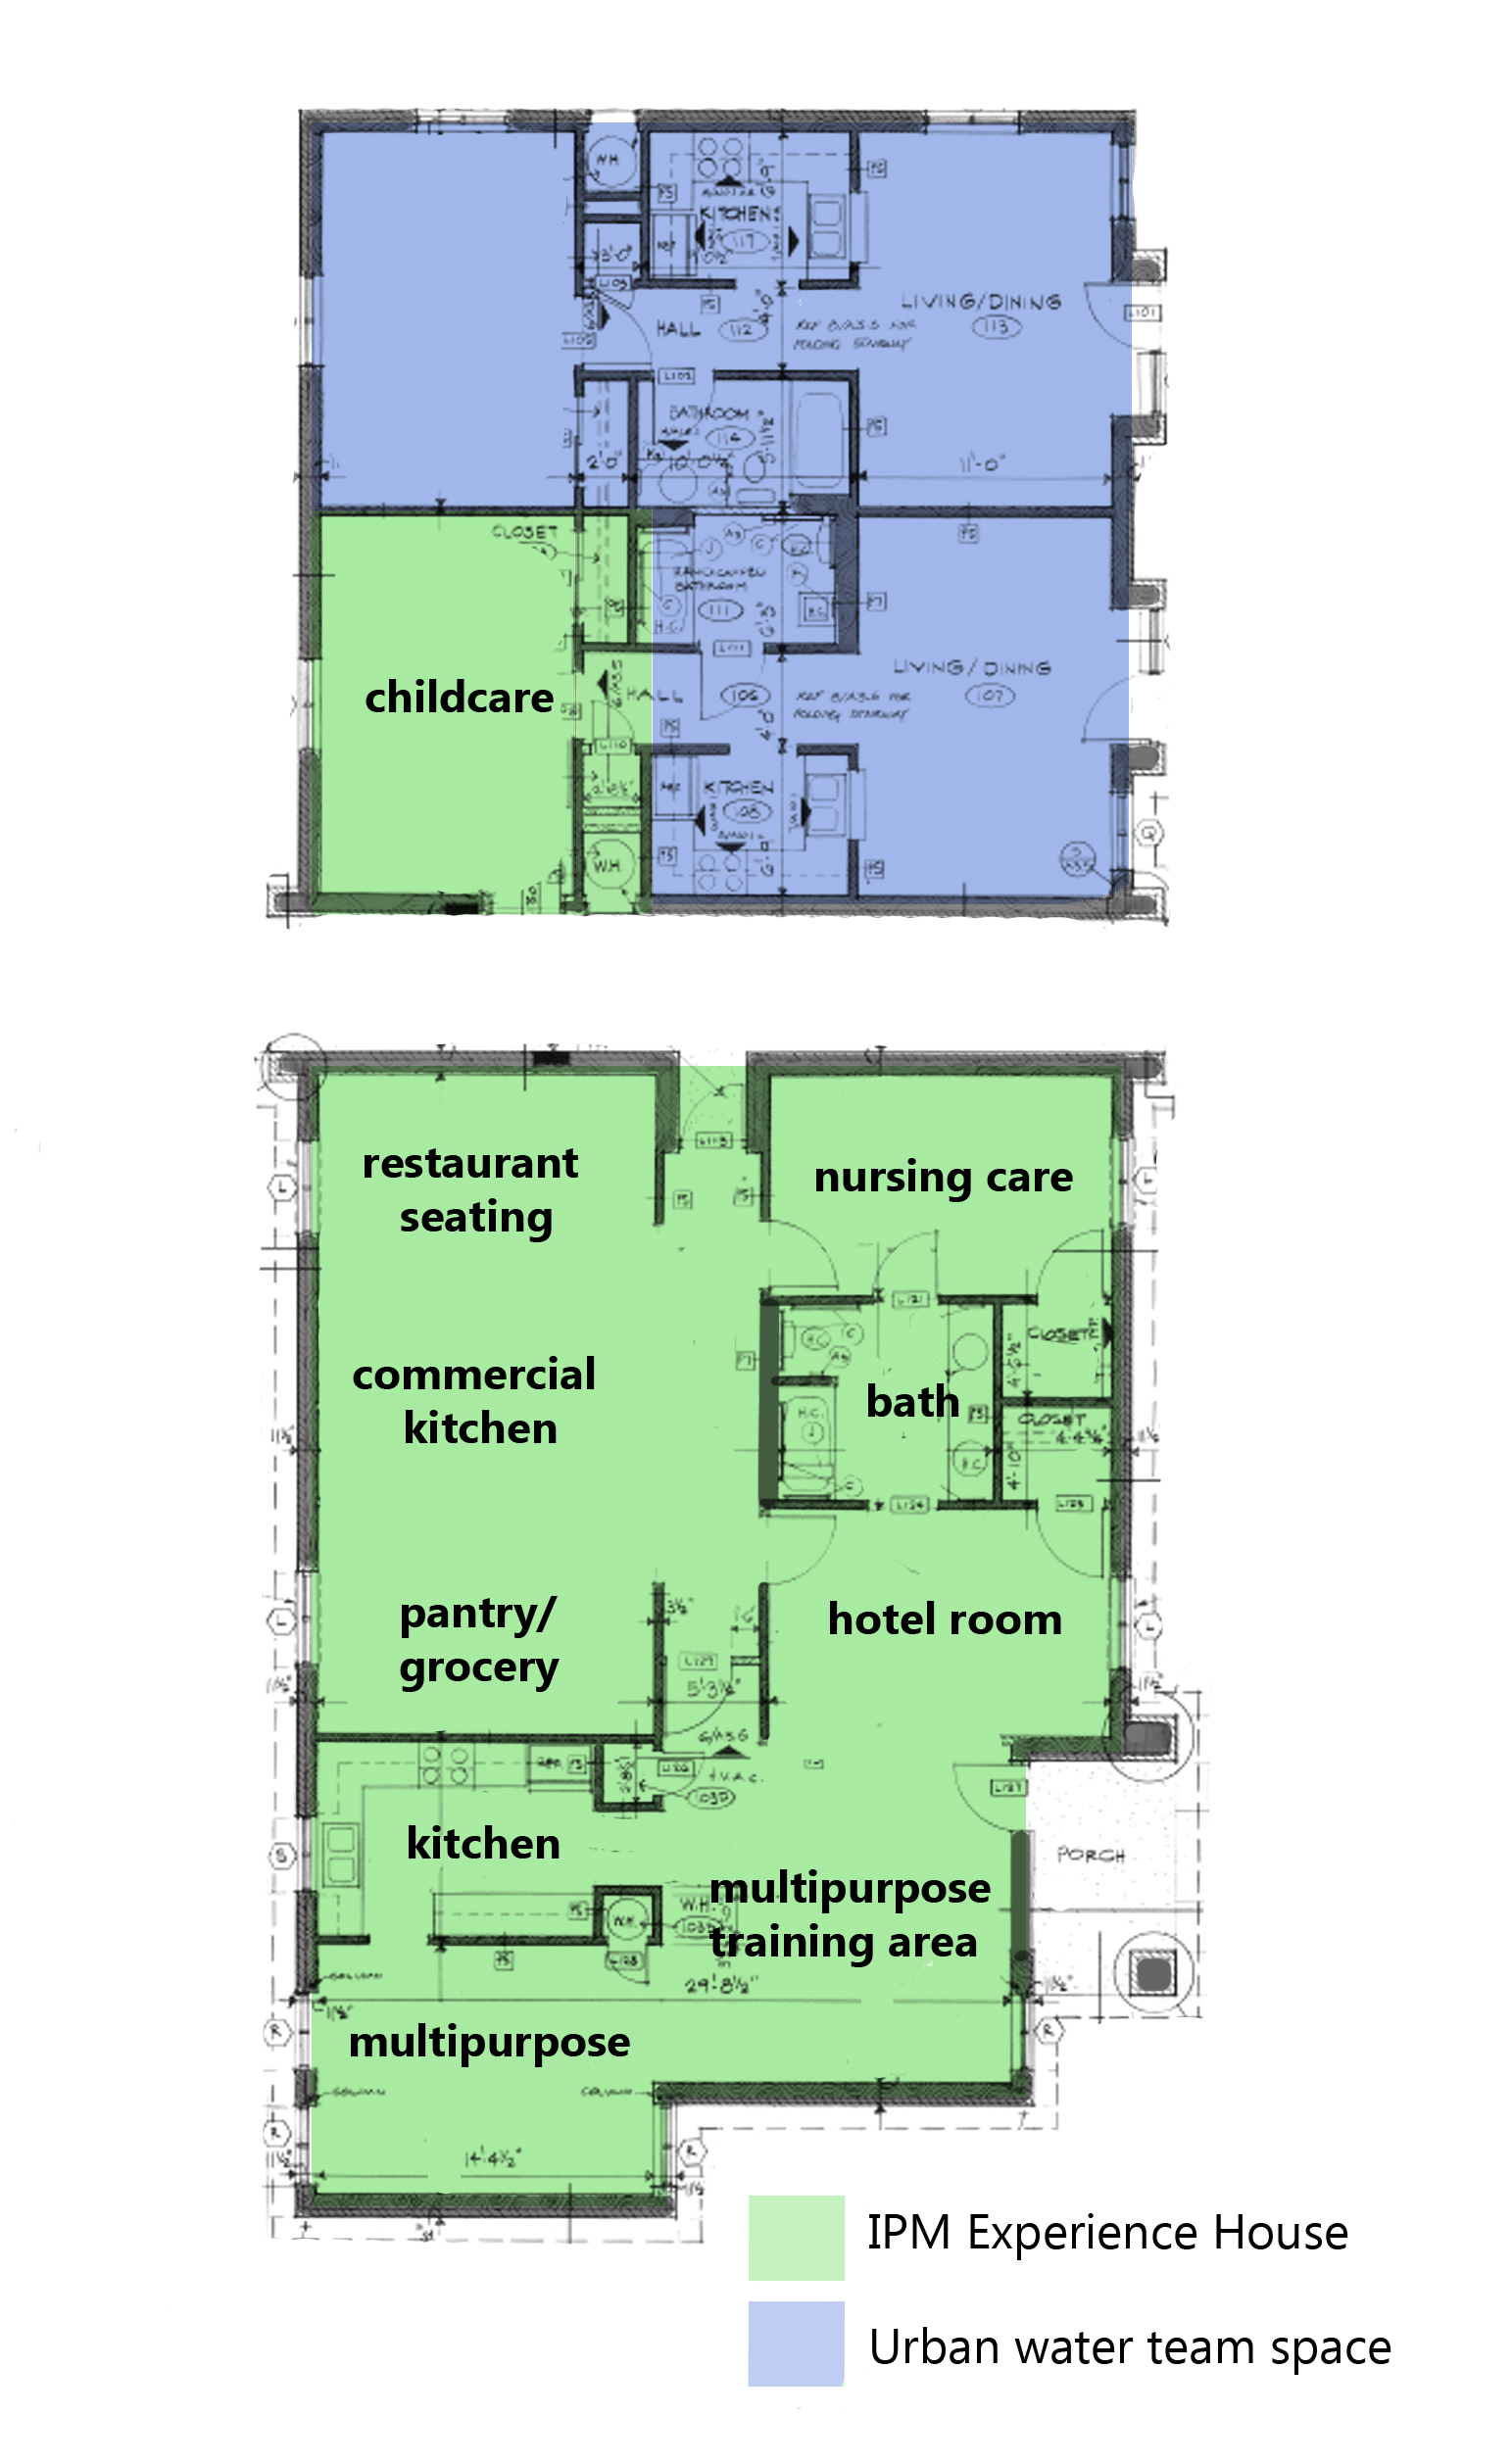 IPM Experience House floor plan